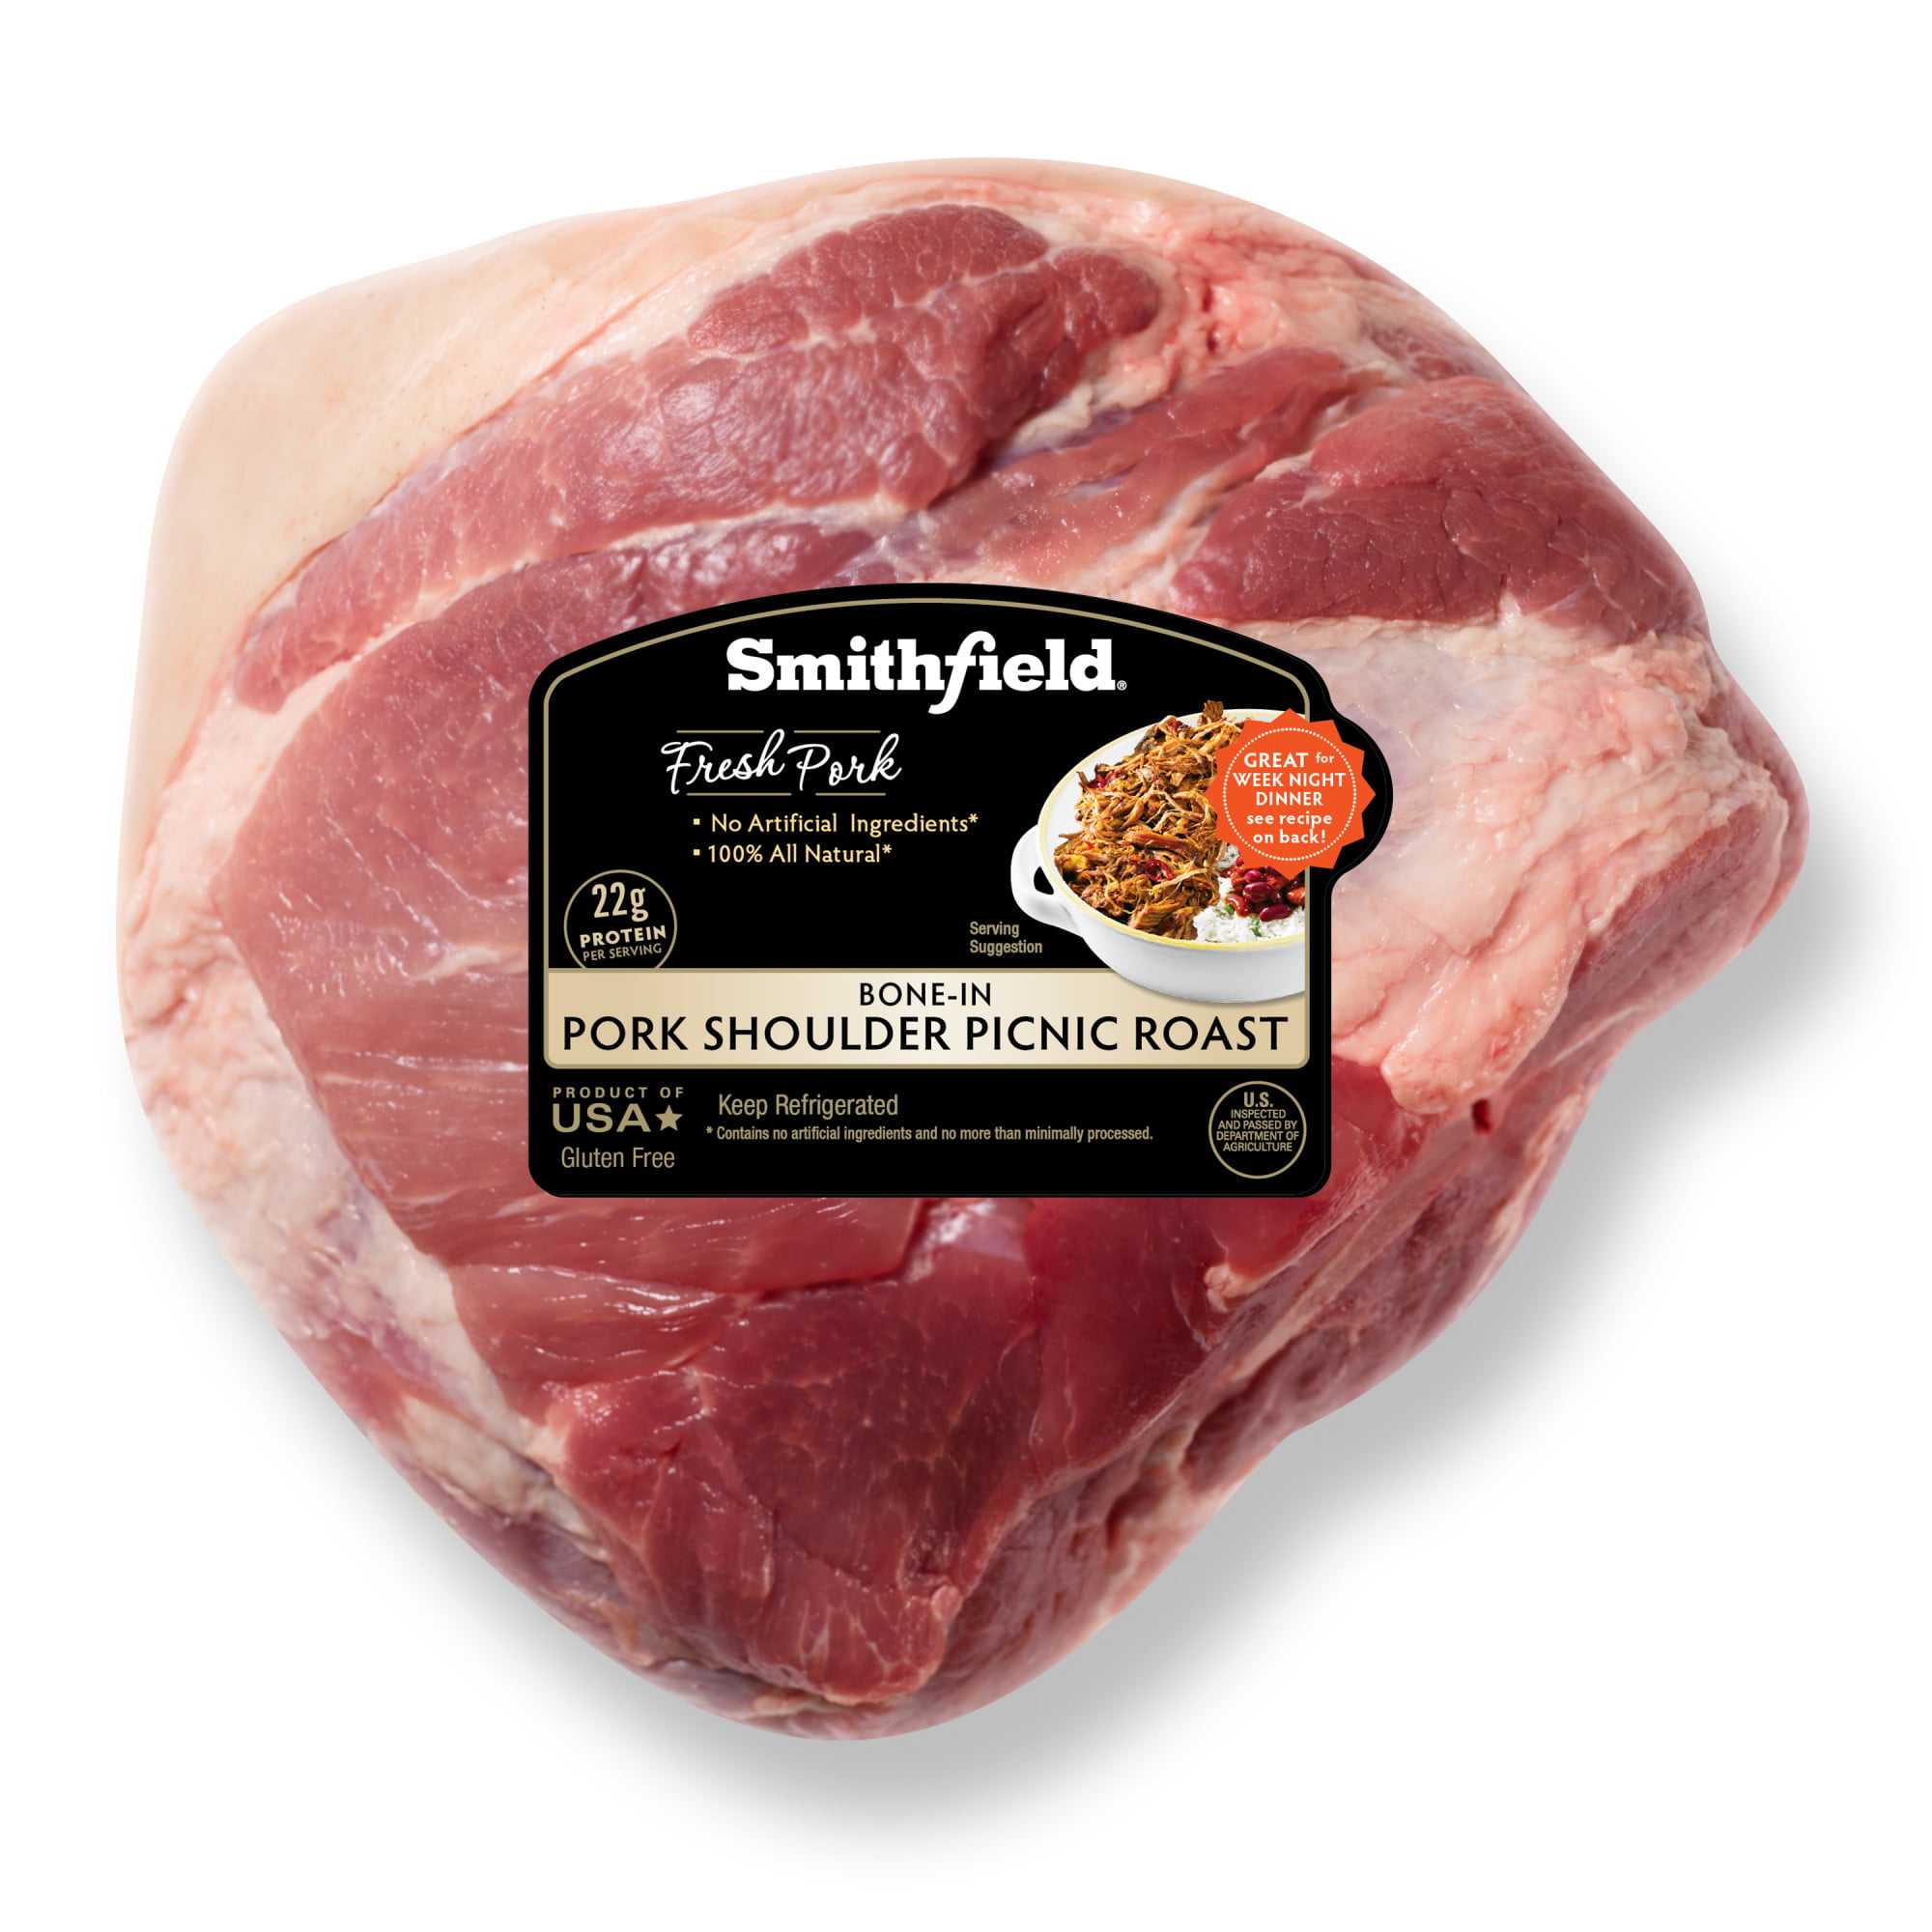 Smithfield Fresh Pork Shoulder Picnic Roast Bone-In, 6-11.5 lb - Walmart.com - Walmart.com